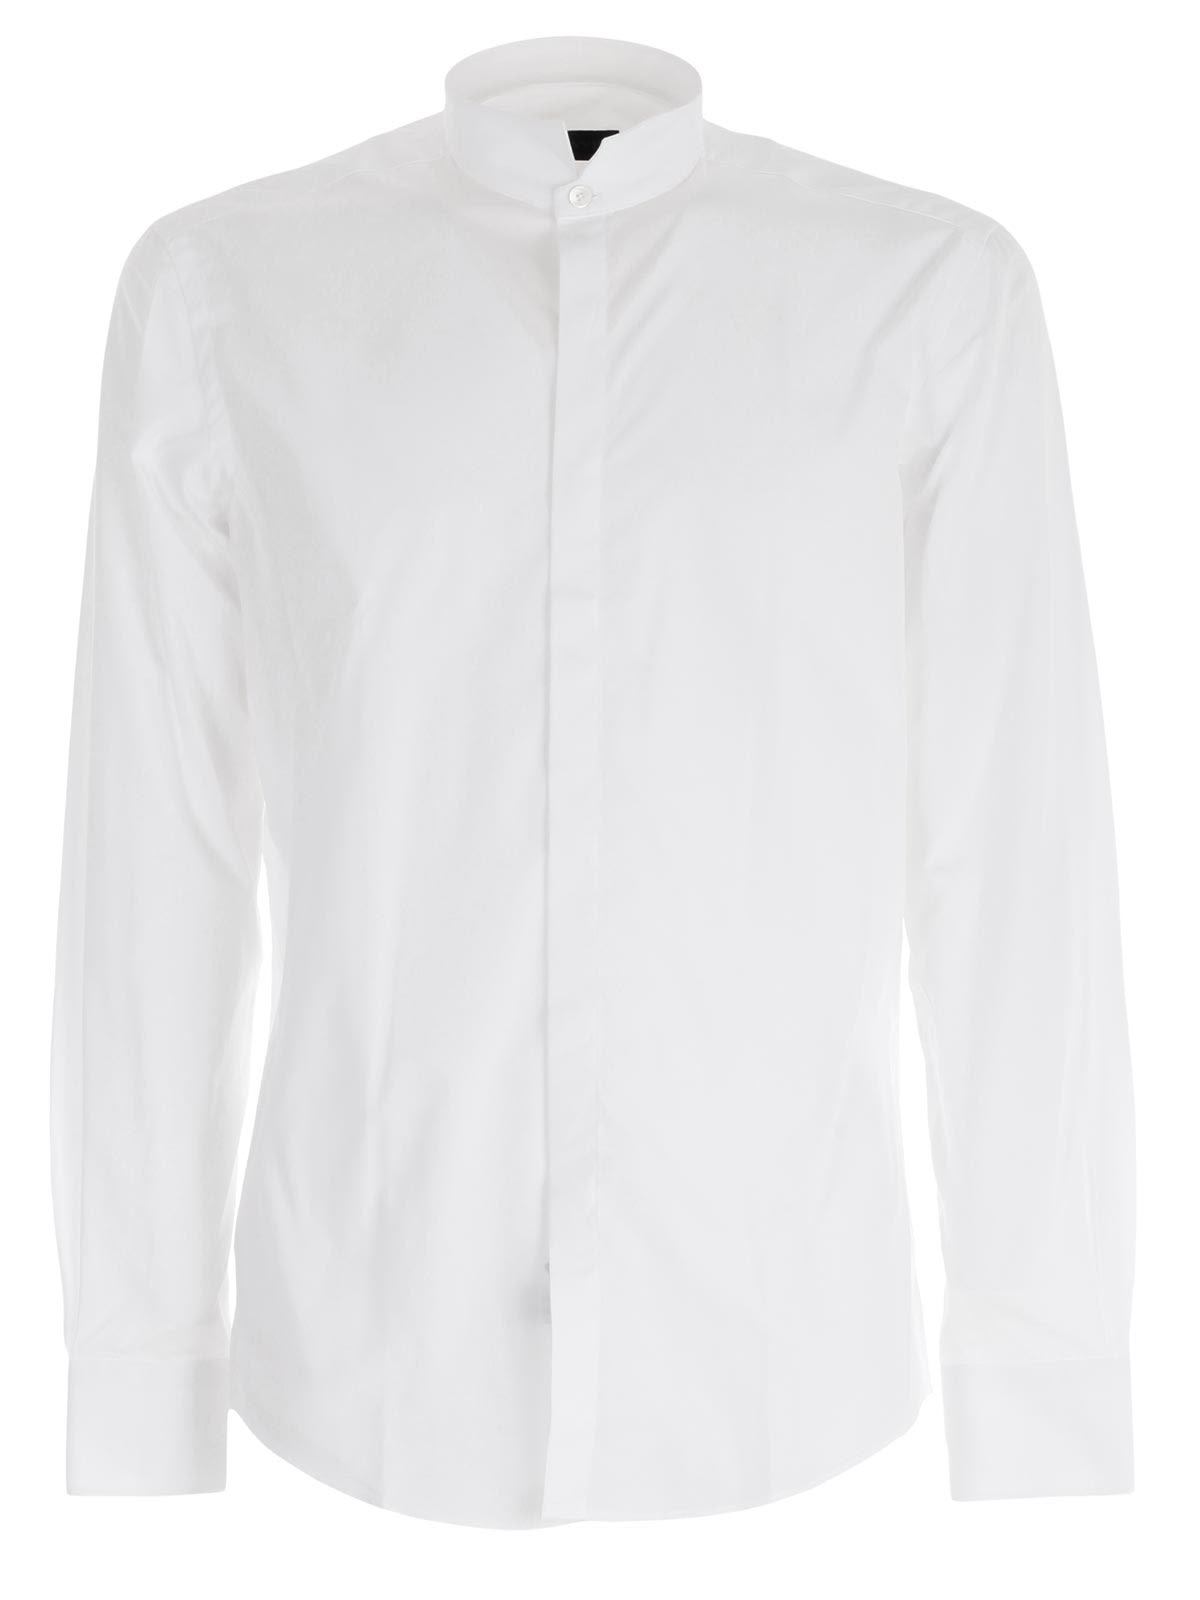 Lanvin - Lanvin Shirt - White, Men's Shirts | Italist